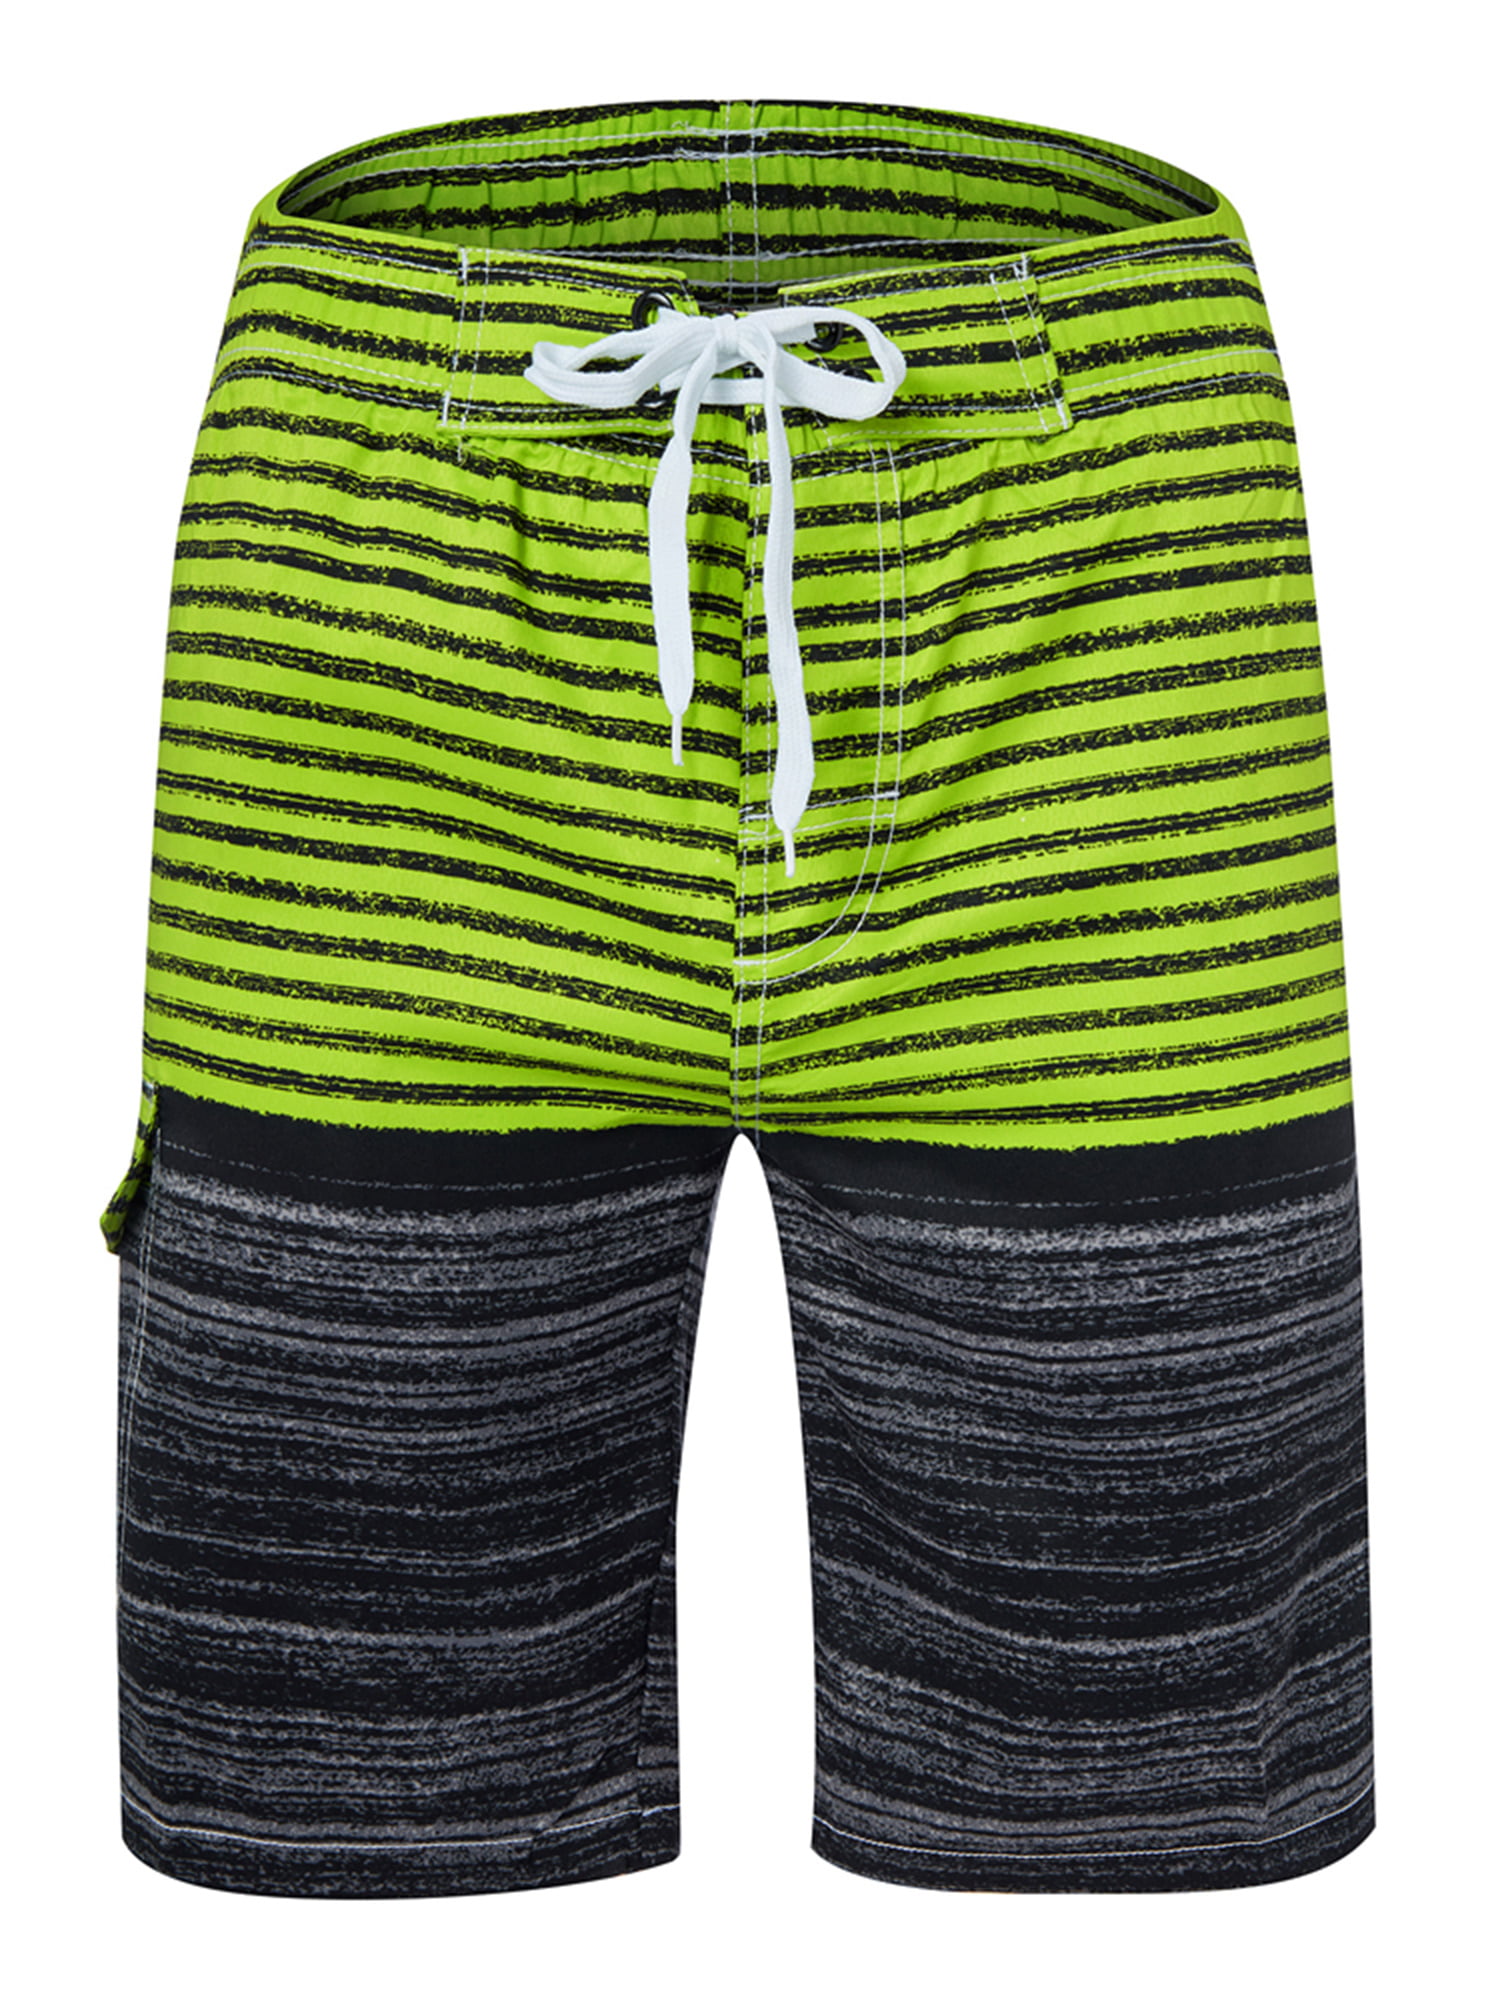 Happy Thanksgiving Mens Beach Shorts Elastic Waist Pockets Lightweight Swimming Board Short Quick Dry Short Trunks 